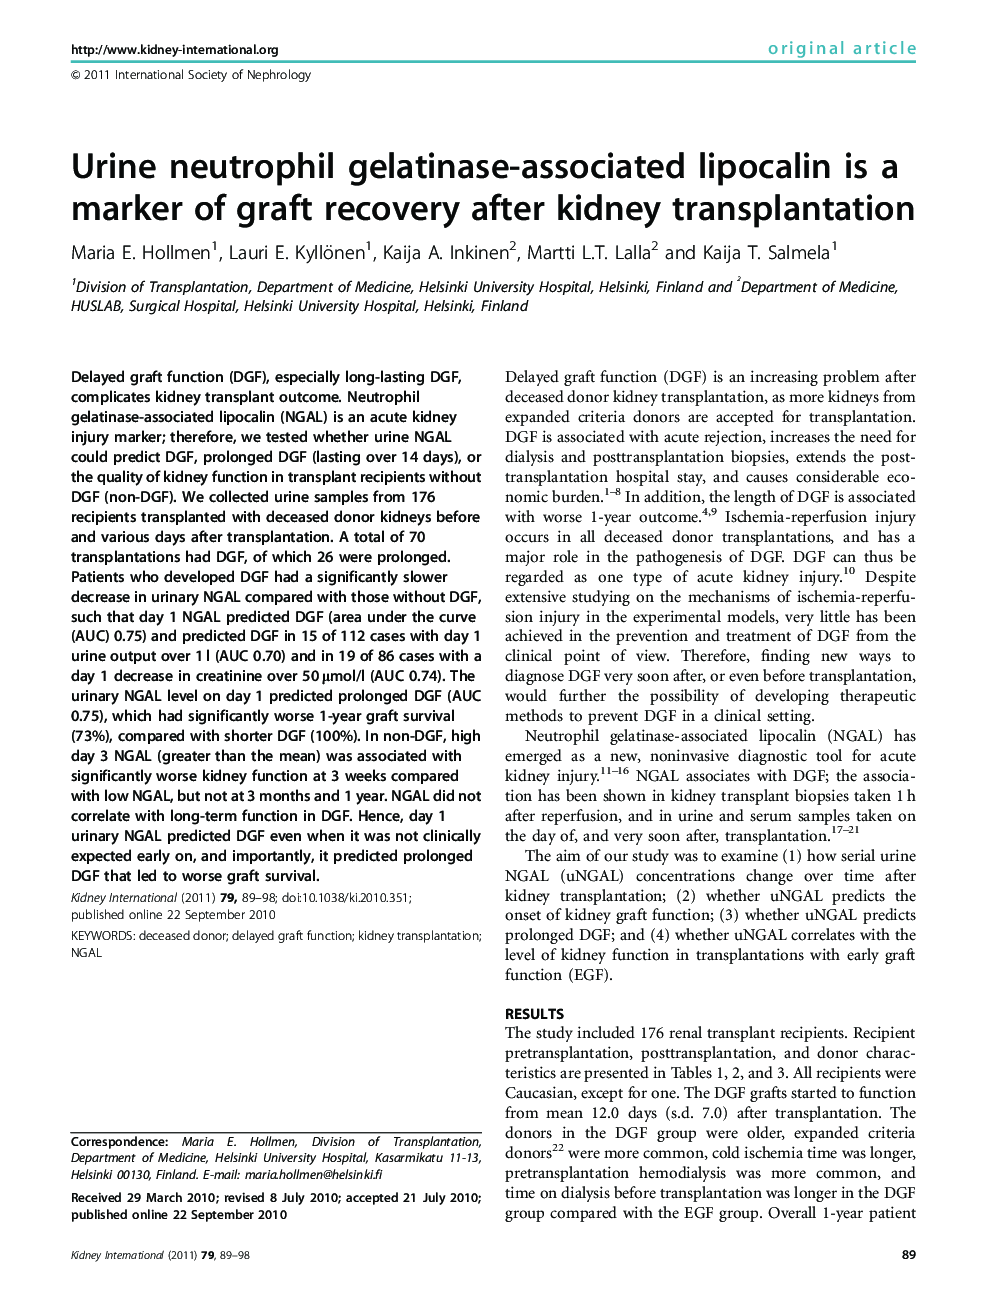 Urine neutrophil gelatinase-associated lipocalin is a marker of graft recovery after kidney transplantation 